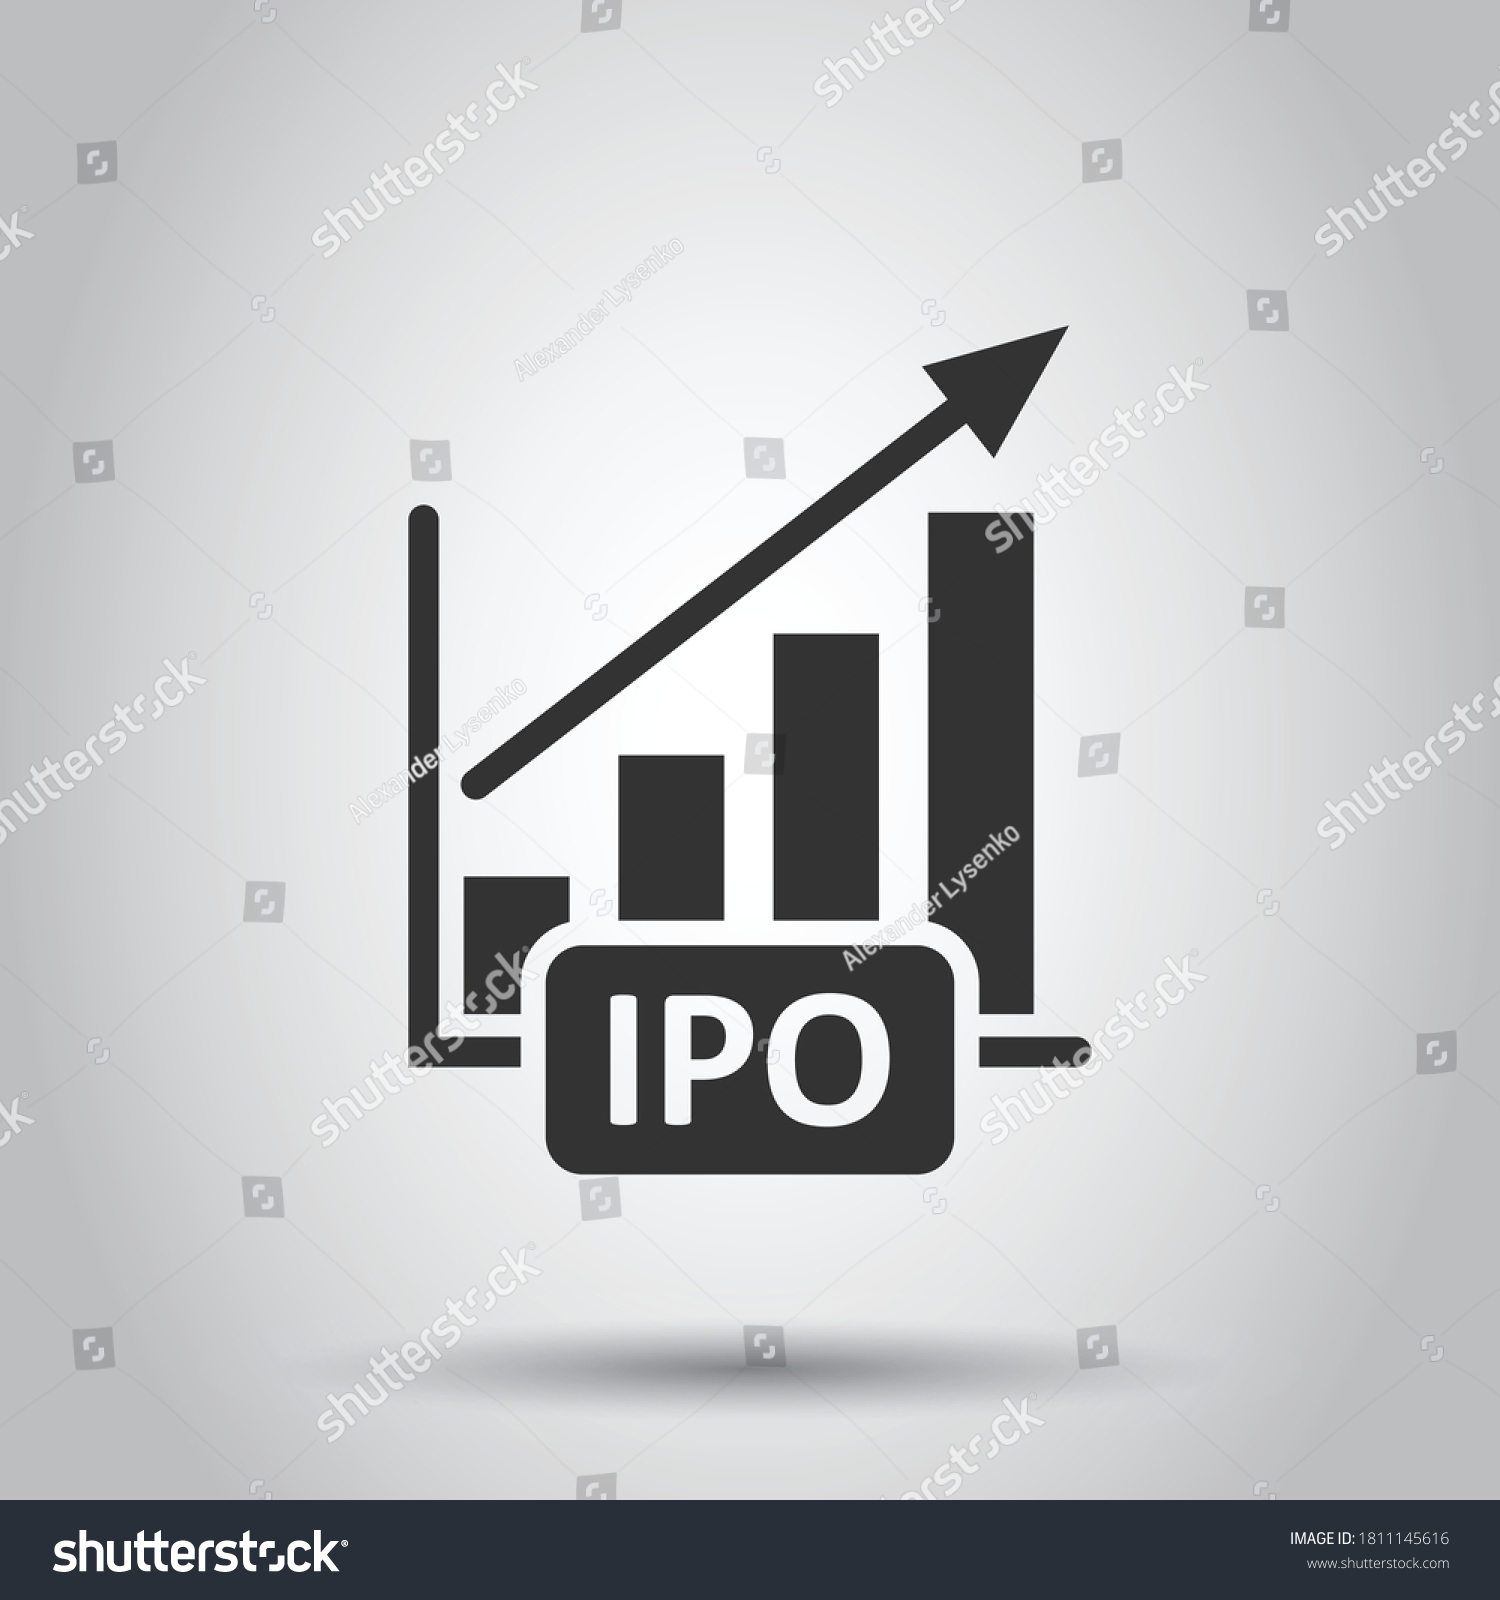 Ipo icon truist financial similar companies